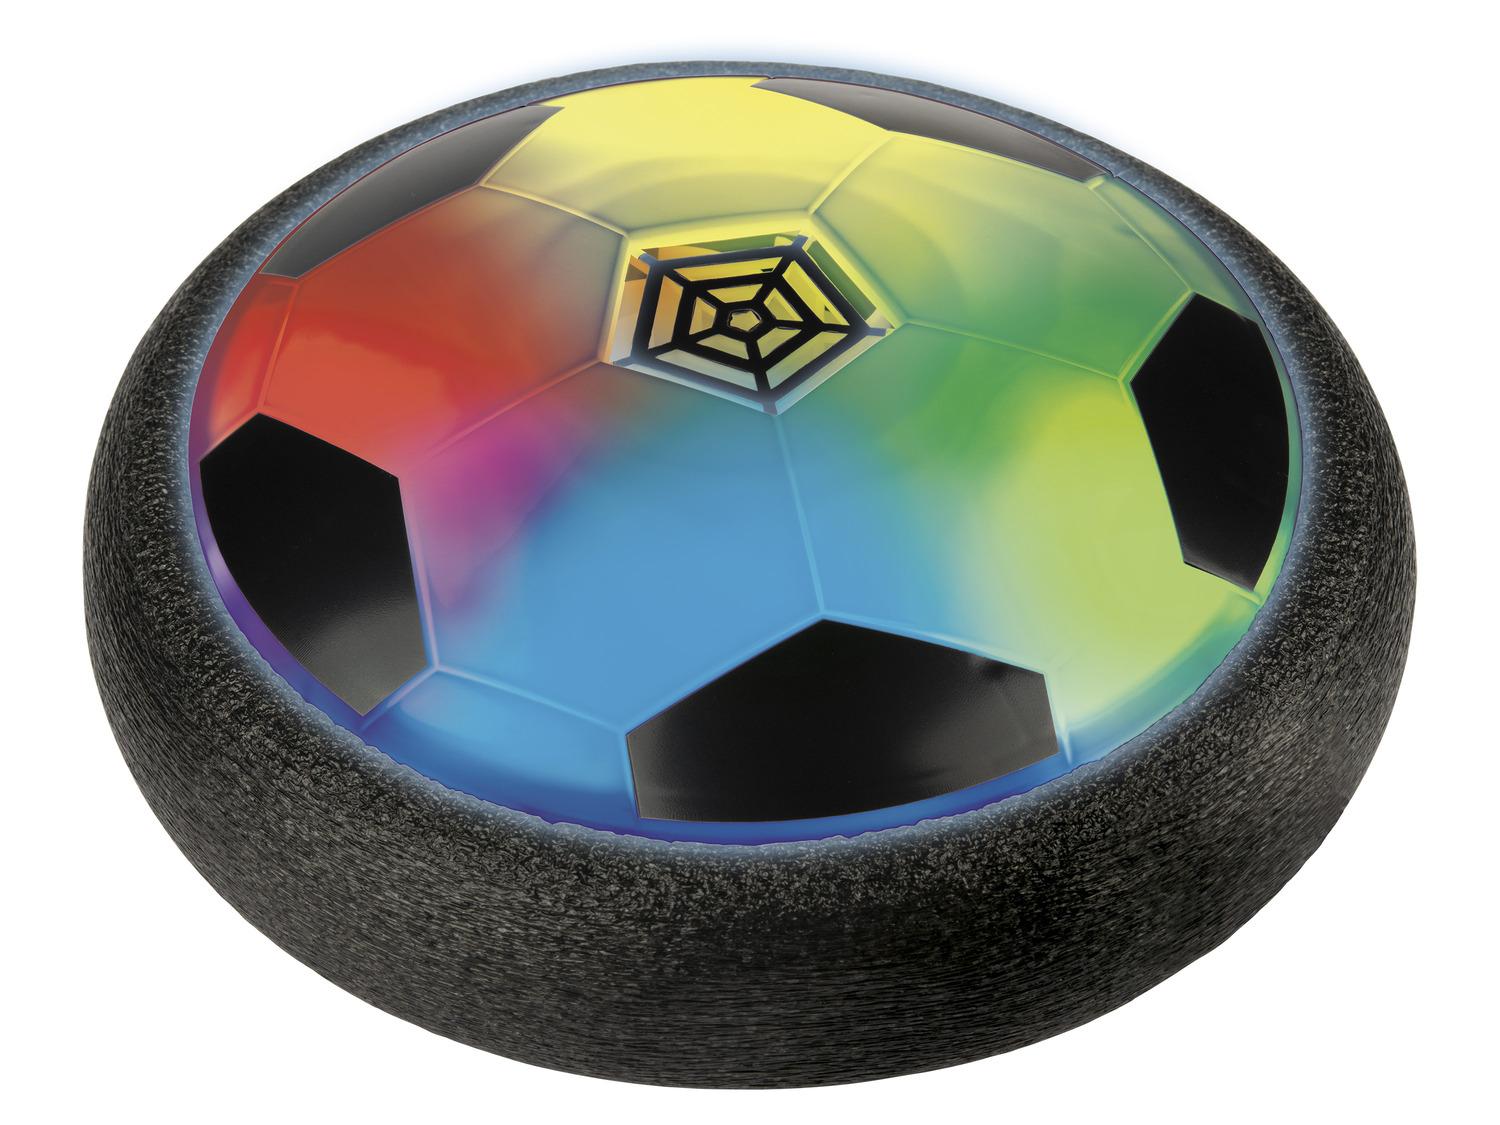 Kaufe LED-Hover-Fußball – Air-Power-Trainingsball zum